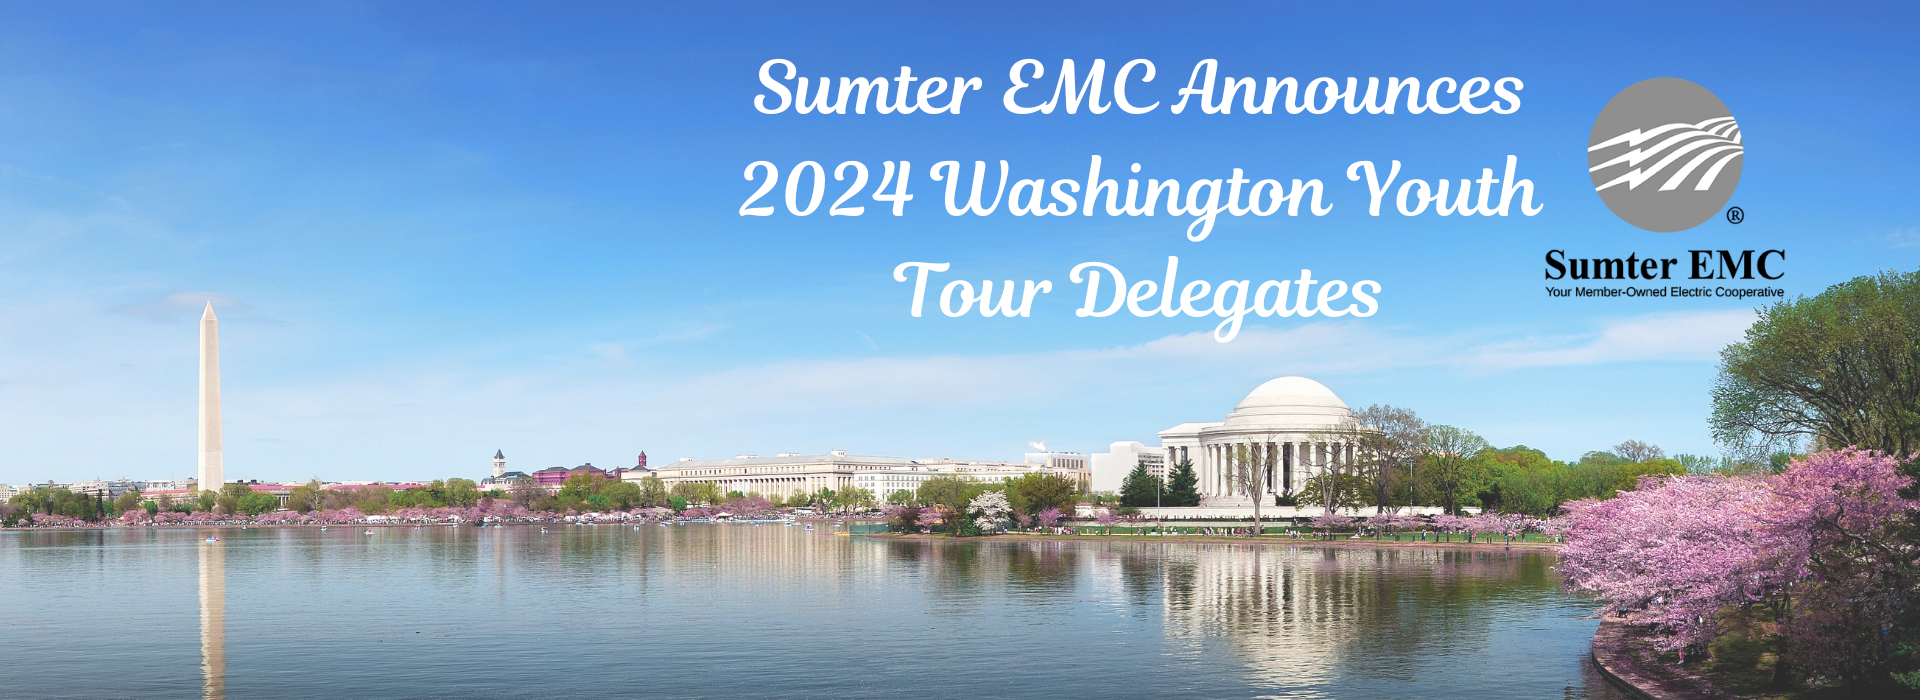 Sumter EMC Announces 2024 Washington Youth Tour Delegates 